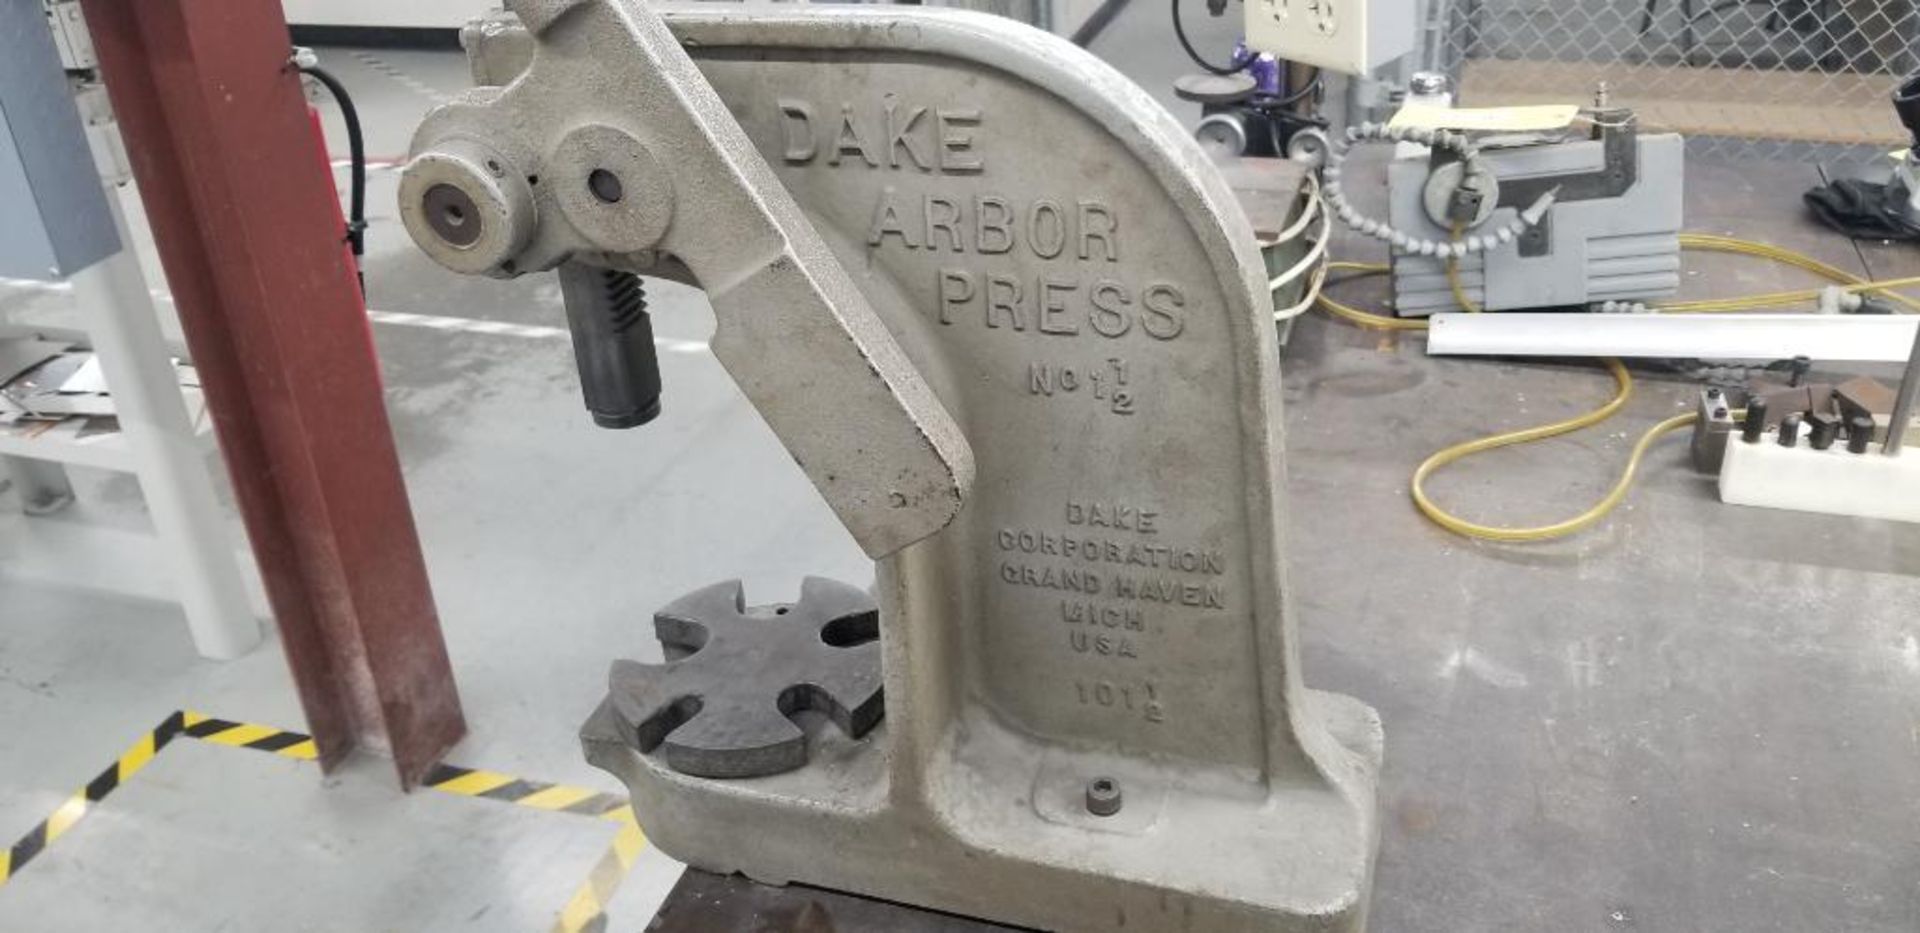 Dake Arbor Press, No. 1-1/2 - Image 2 of 2